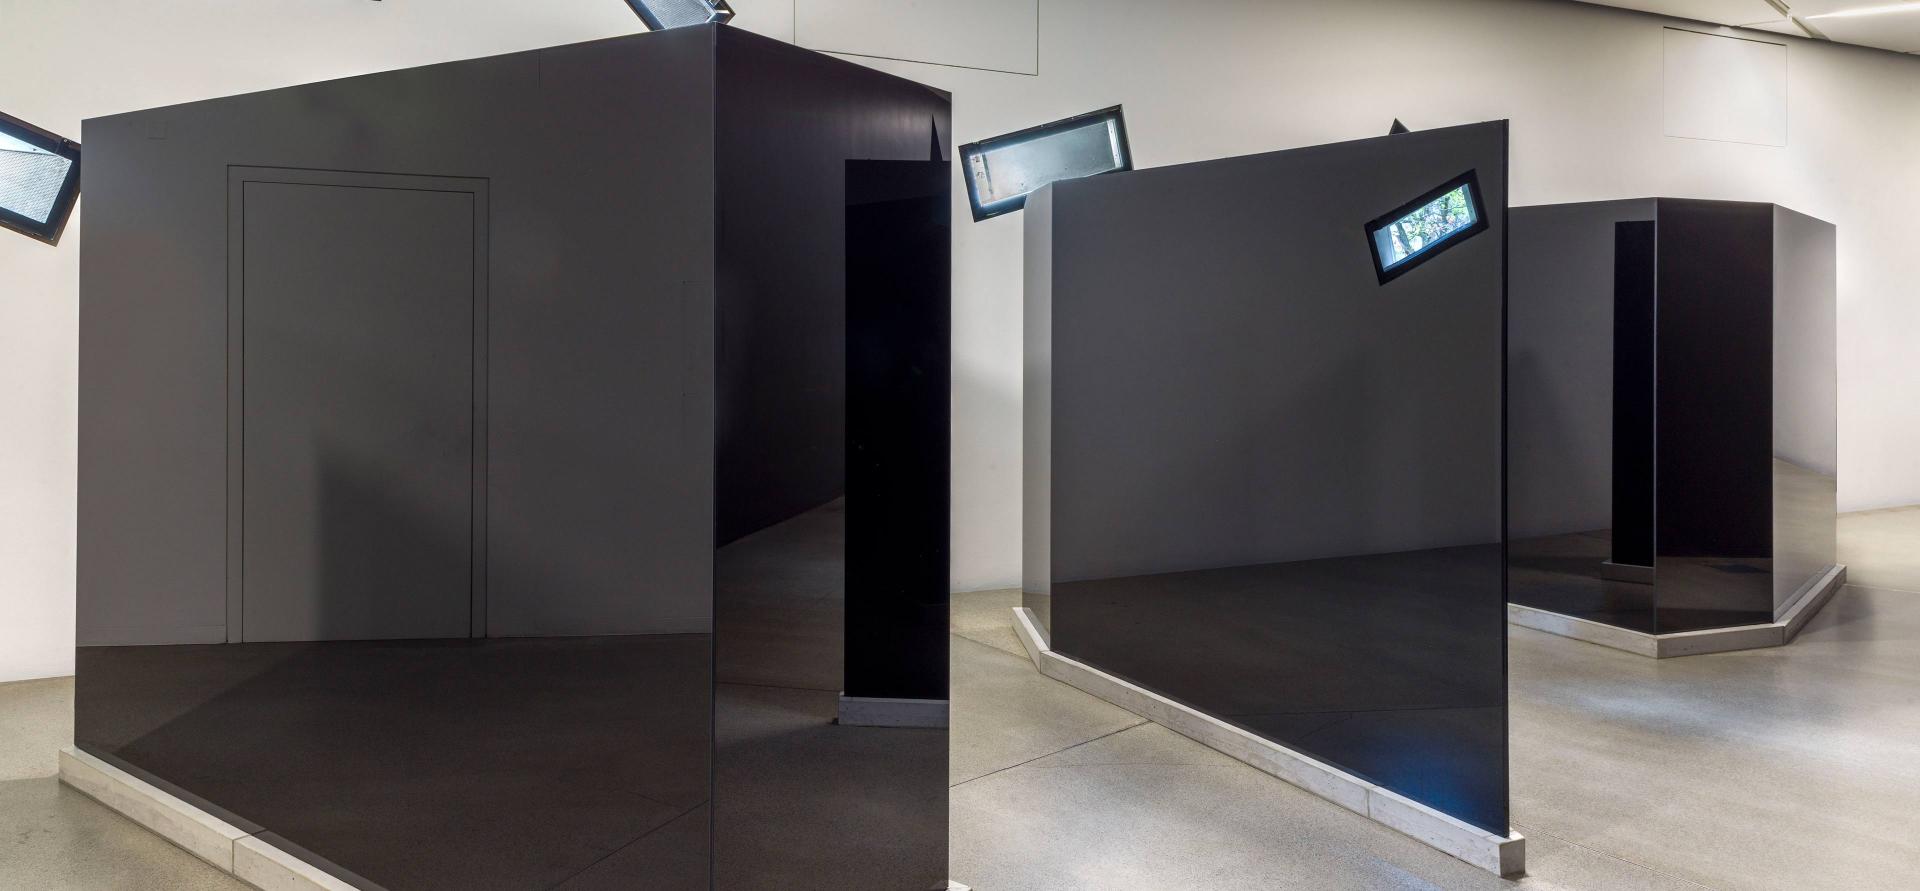 Drei schwarze, trapezförmige Glasskulpturen